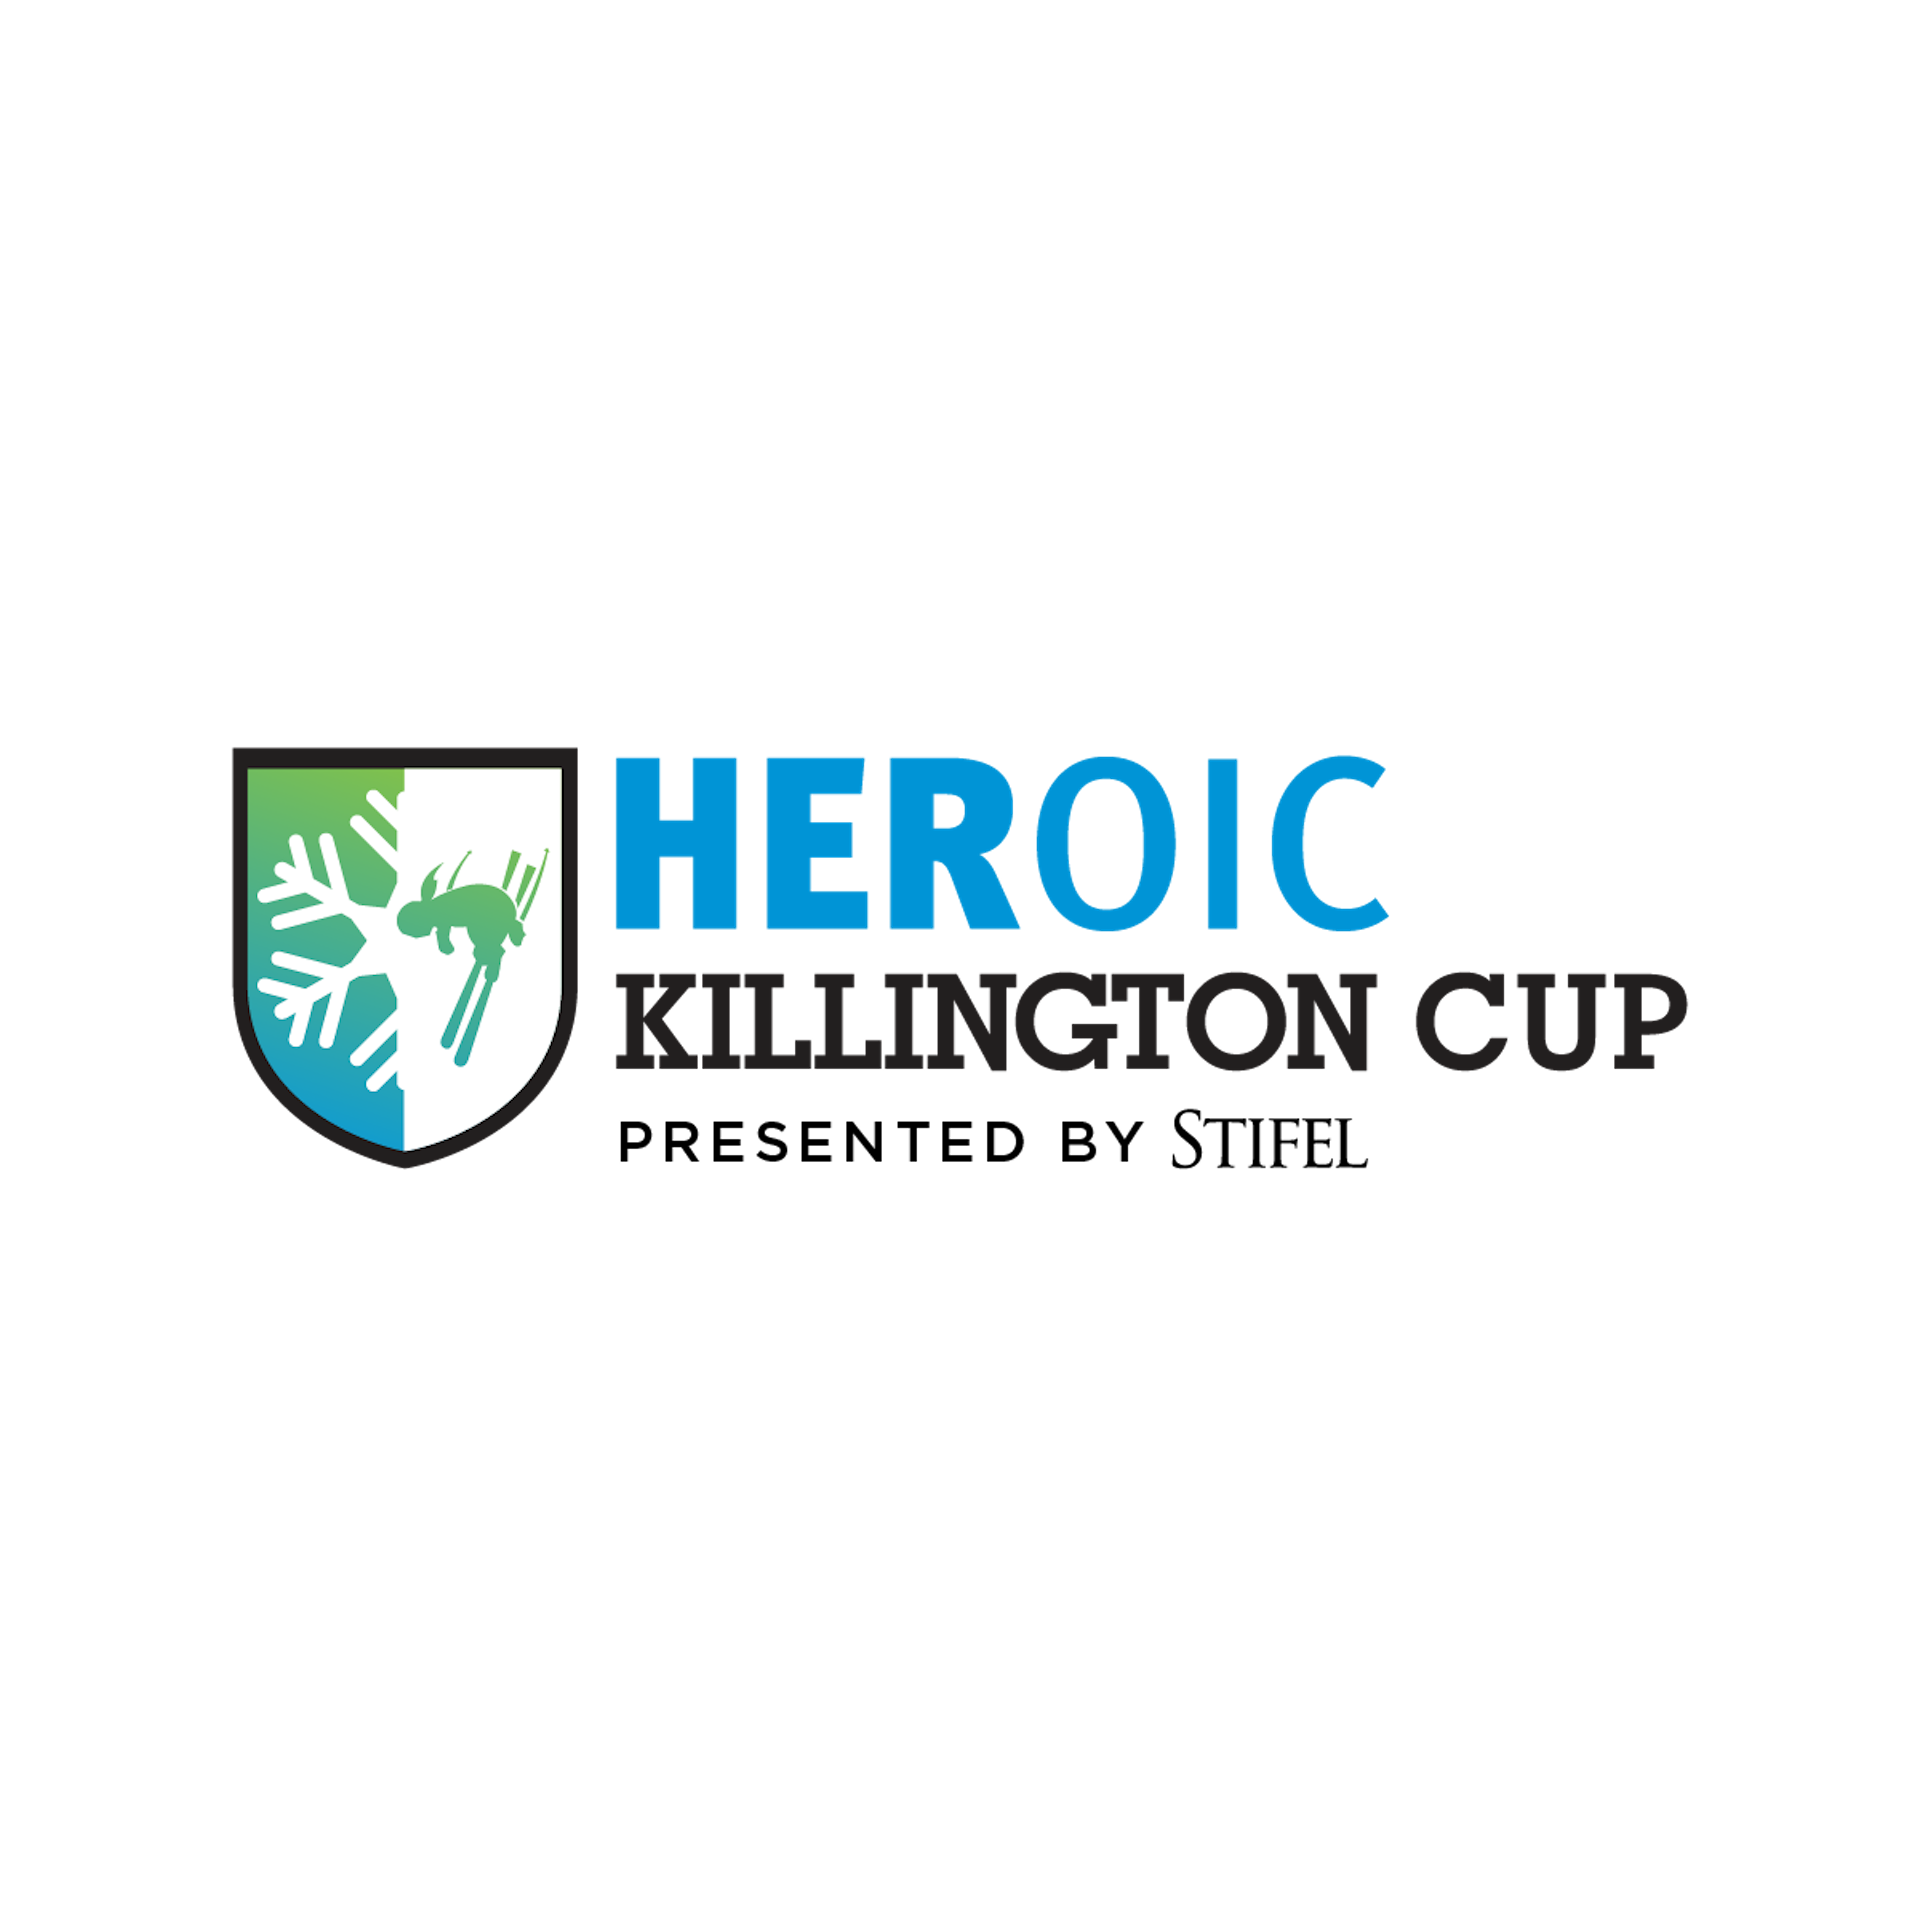 Heroic Killington Cup presented by Stifel